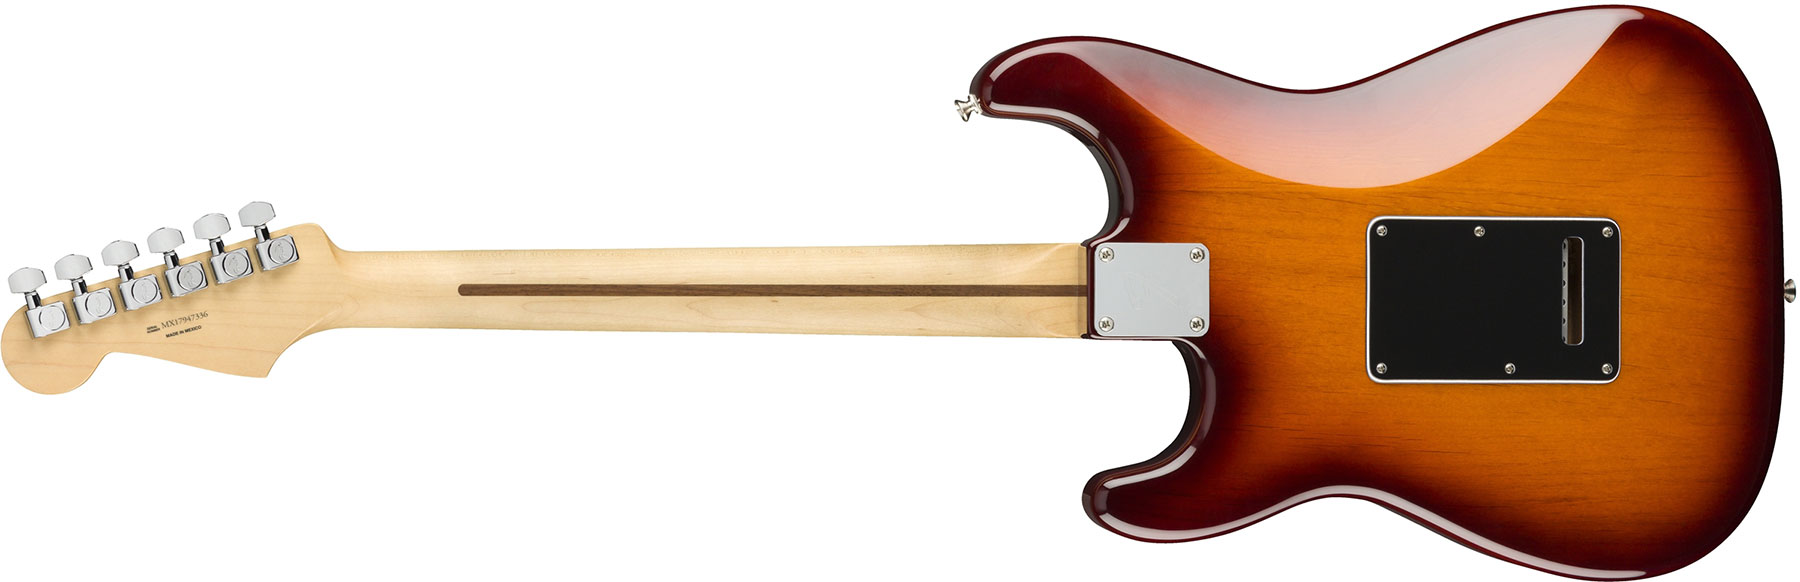 Fender Strat Player Plus Top Mex Hss Pf - Tobacco Burst - E-Gitarre in Str-Form - Variation 1